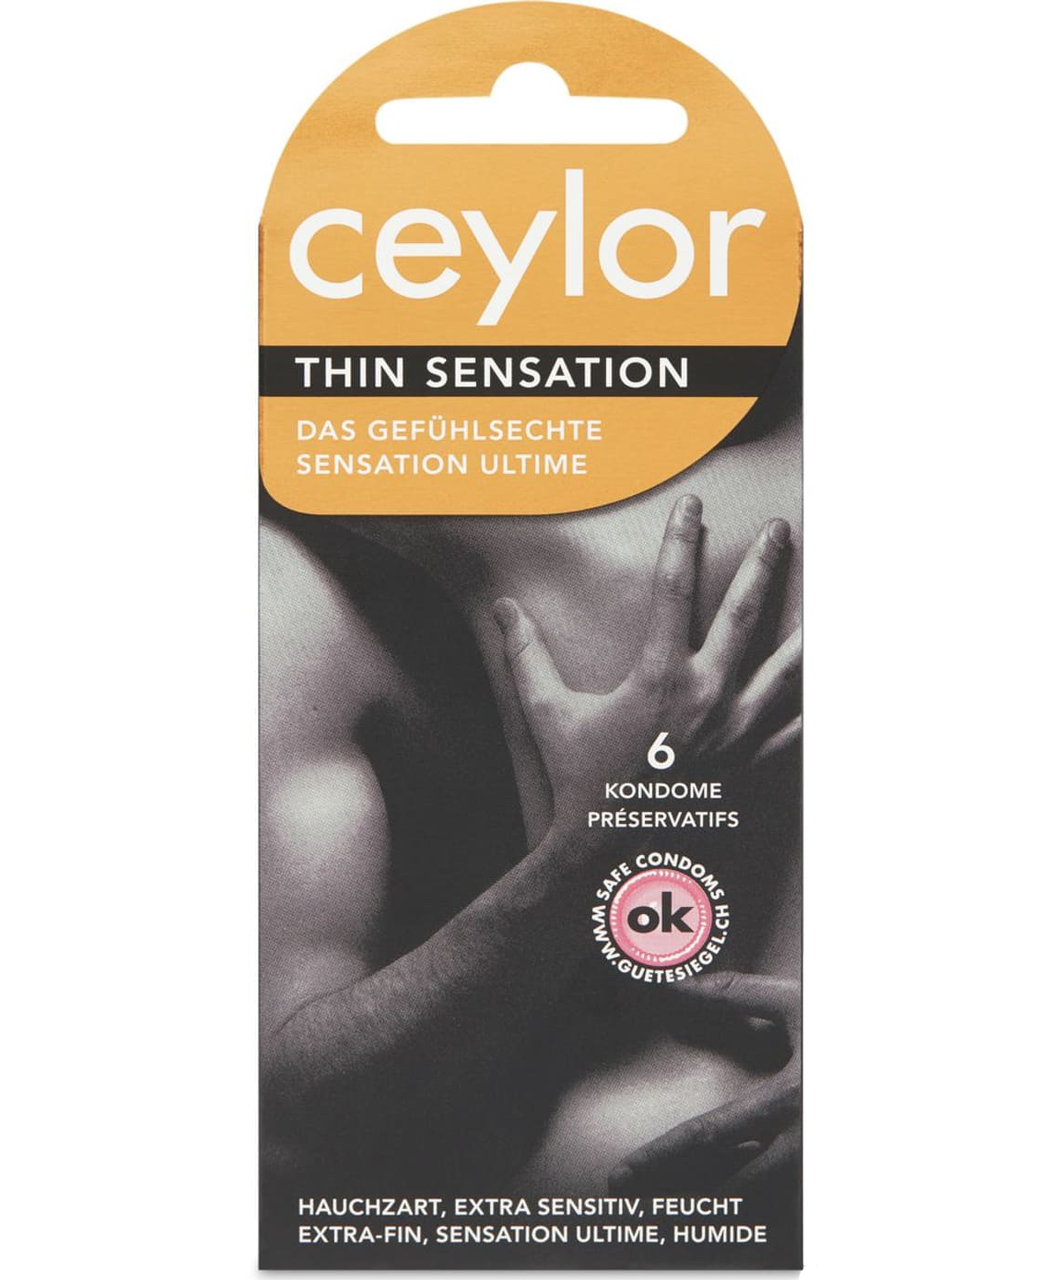 Ceylor Thin Sensation презервативы (6 / 9 шт.)